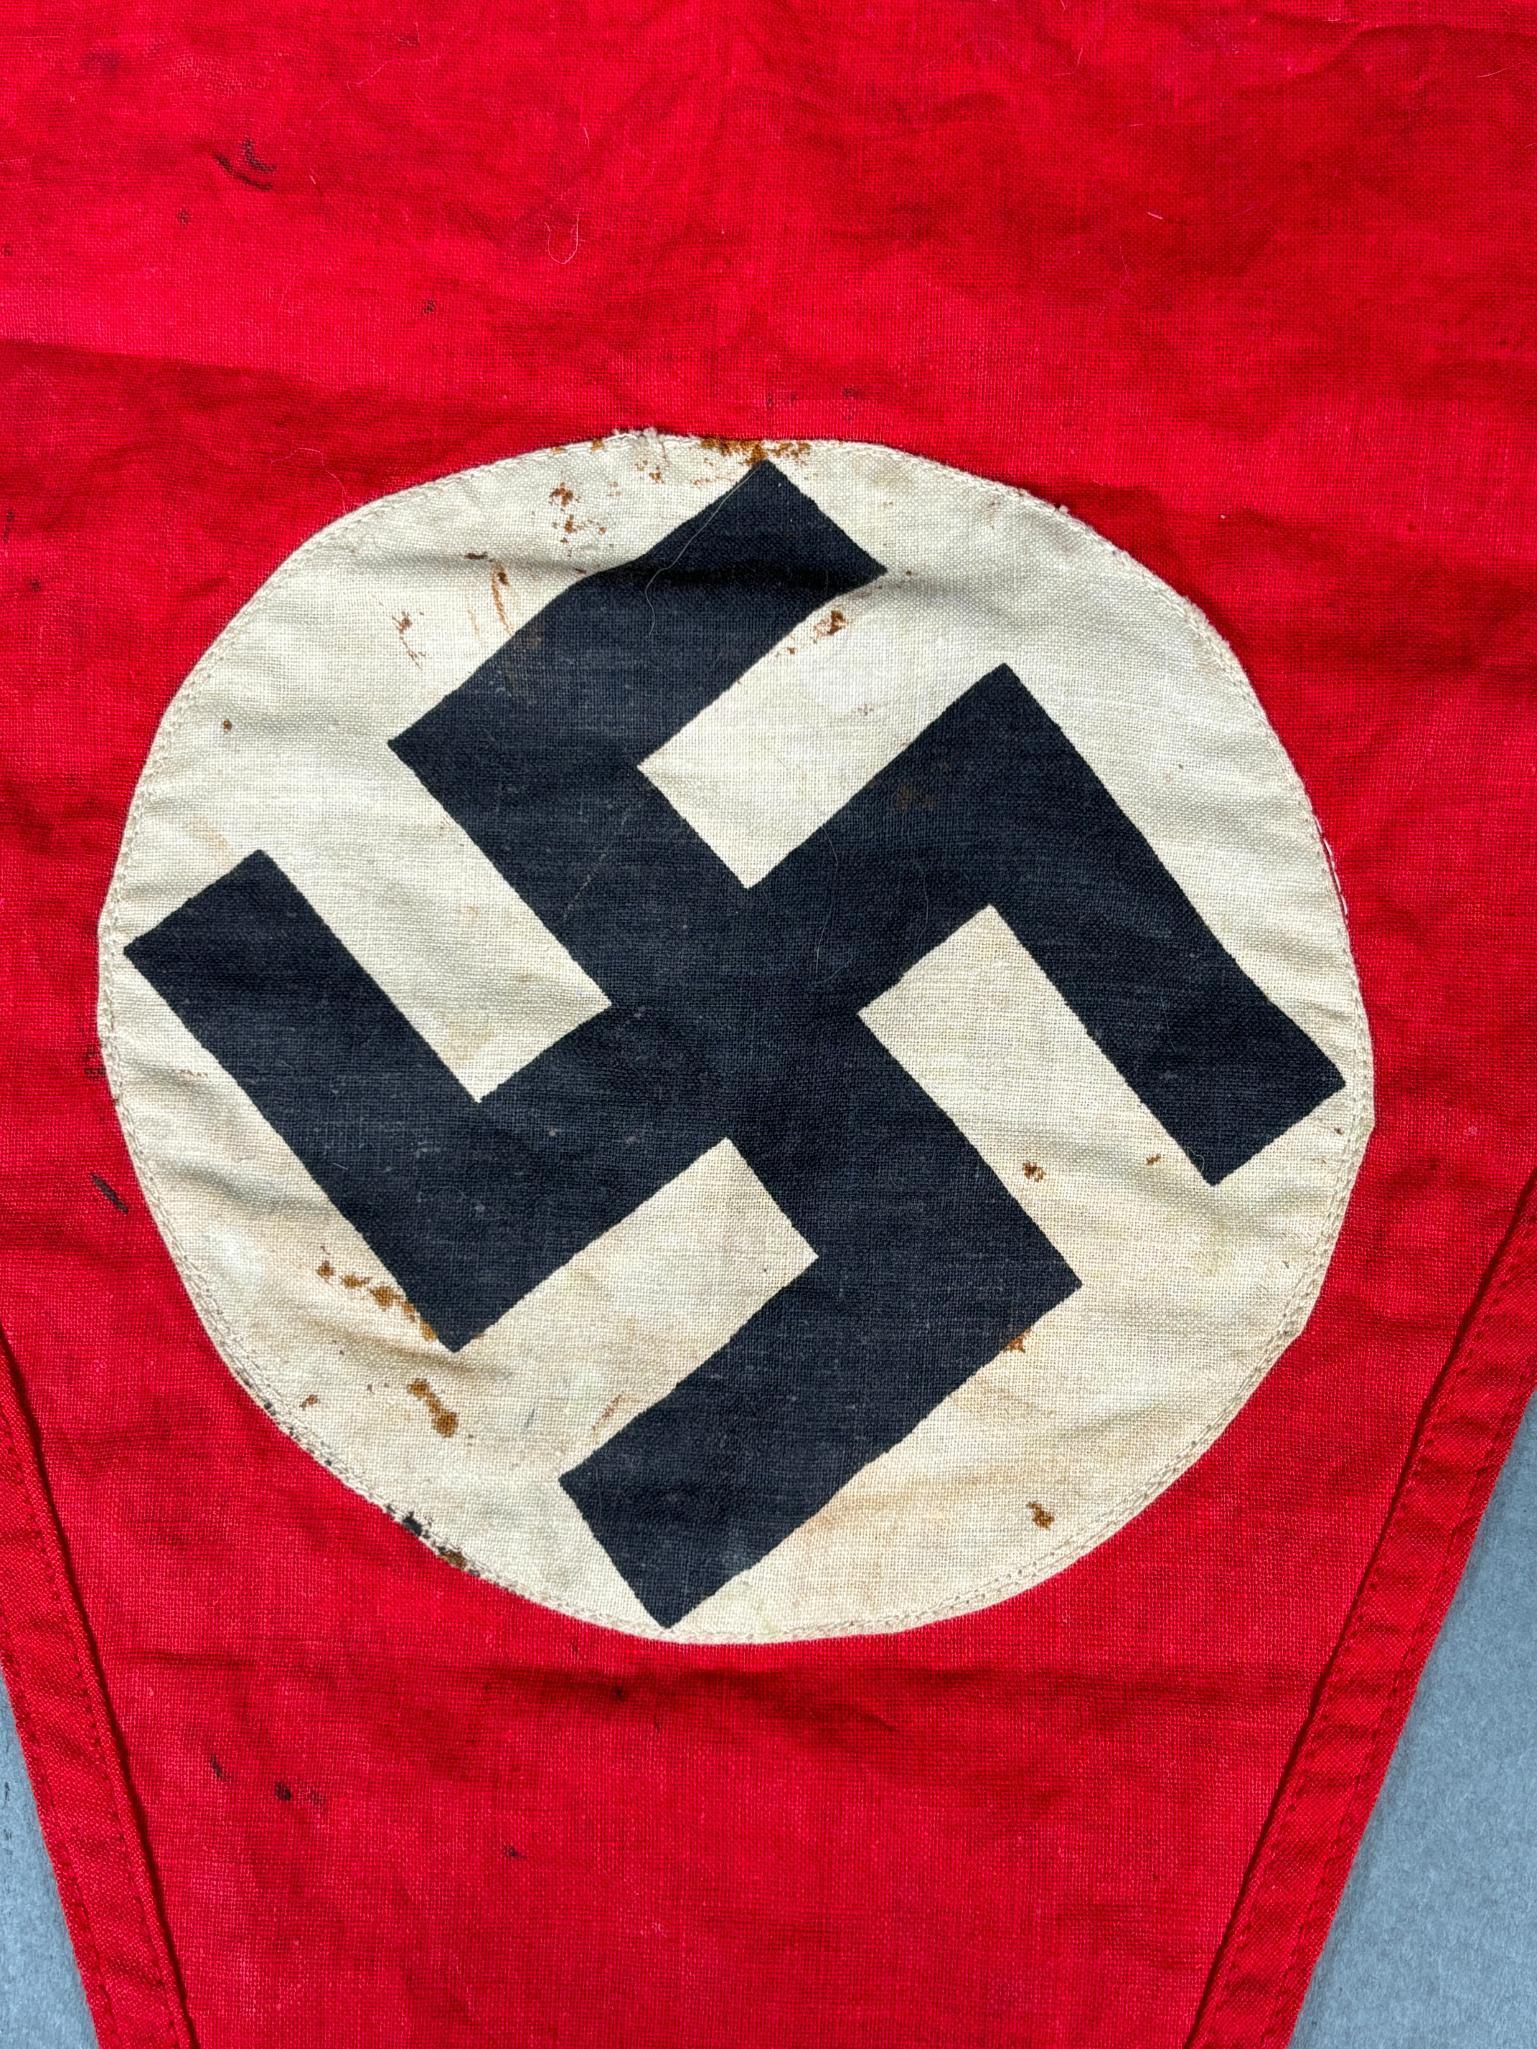 WWII NAZI GERMAN NSDAP PENNANT - FLAG